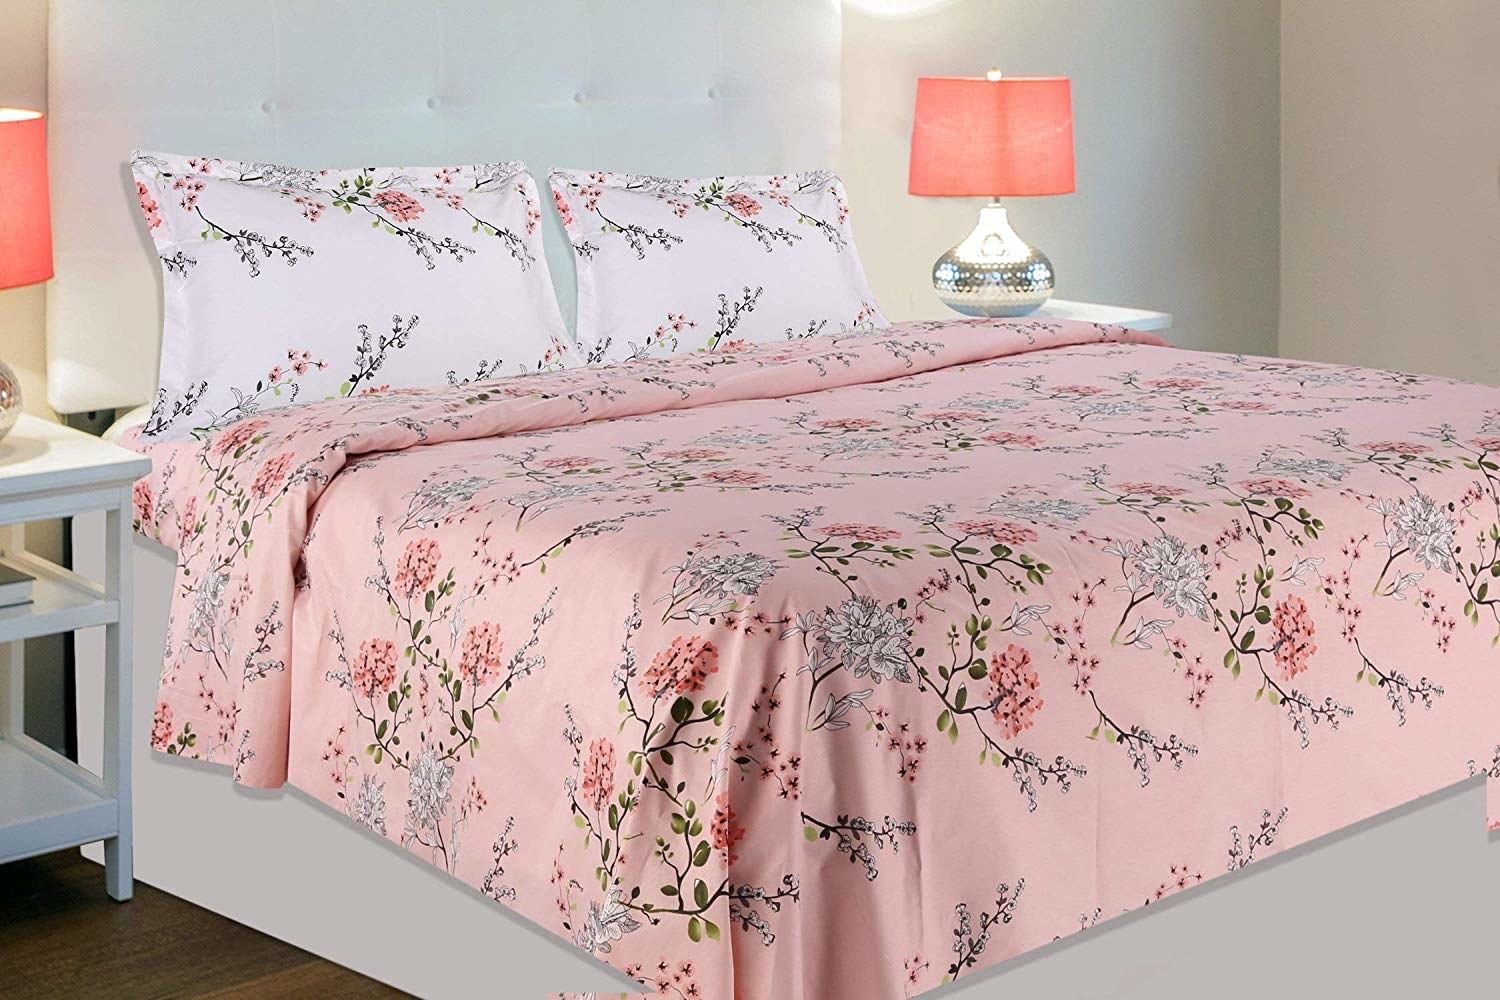 A floral pink bedsheet